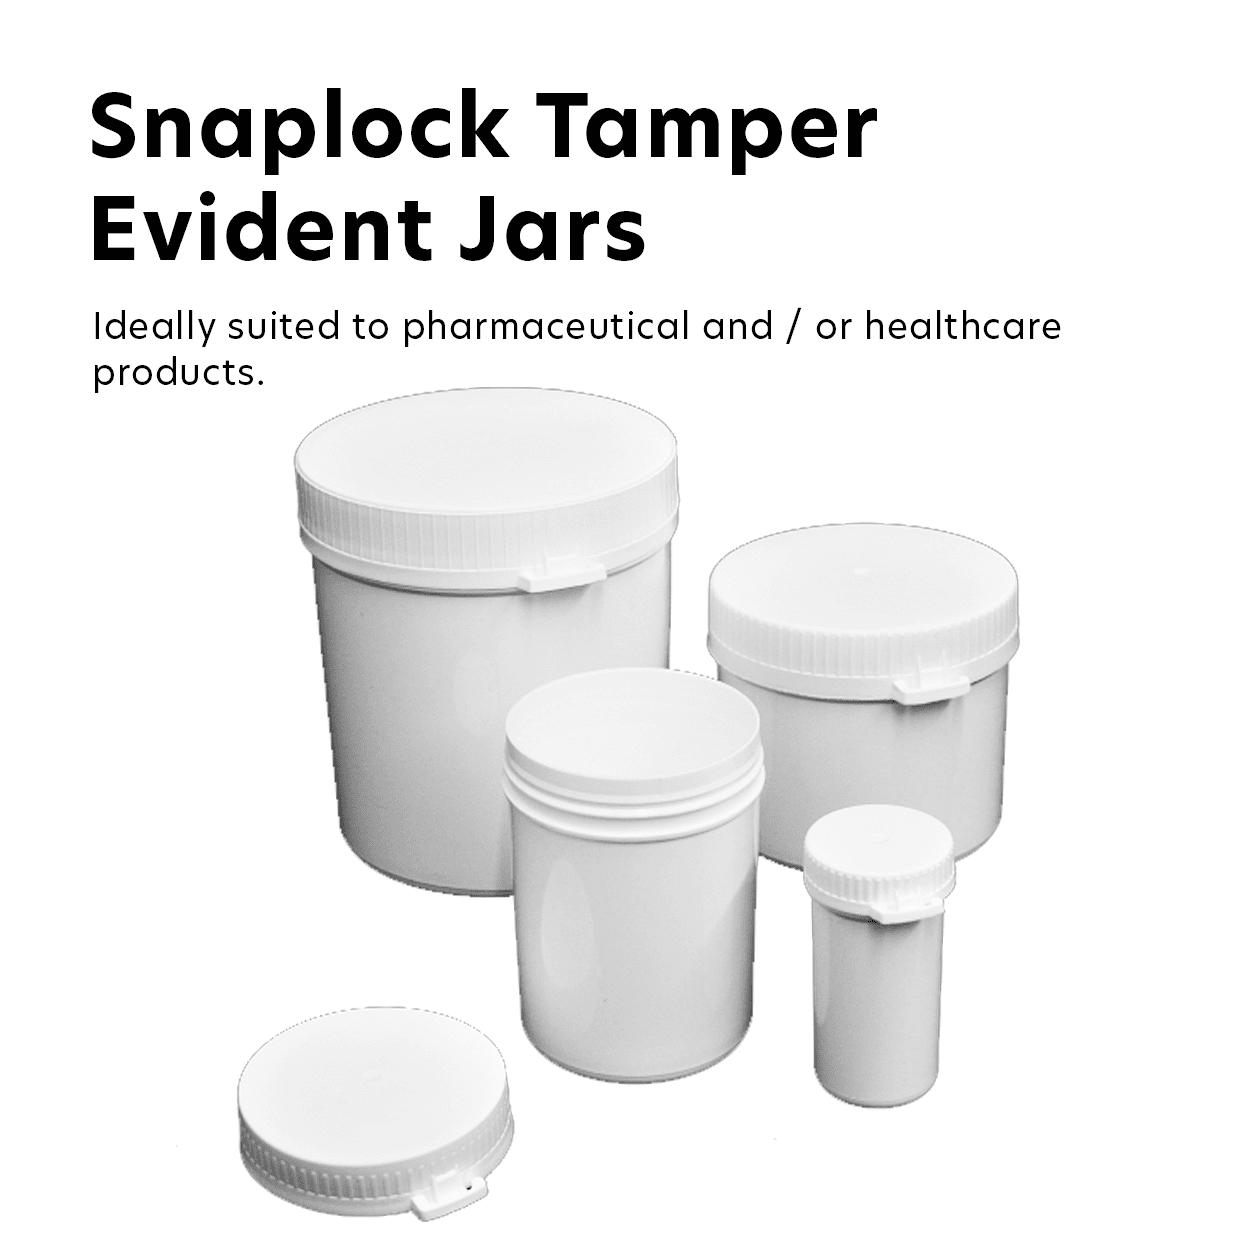 Snaplock Tamper Evident Jars